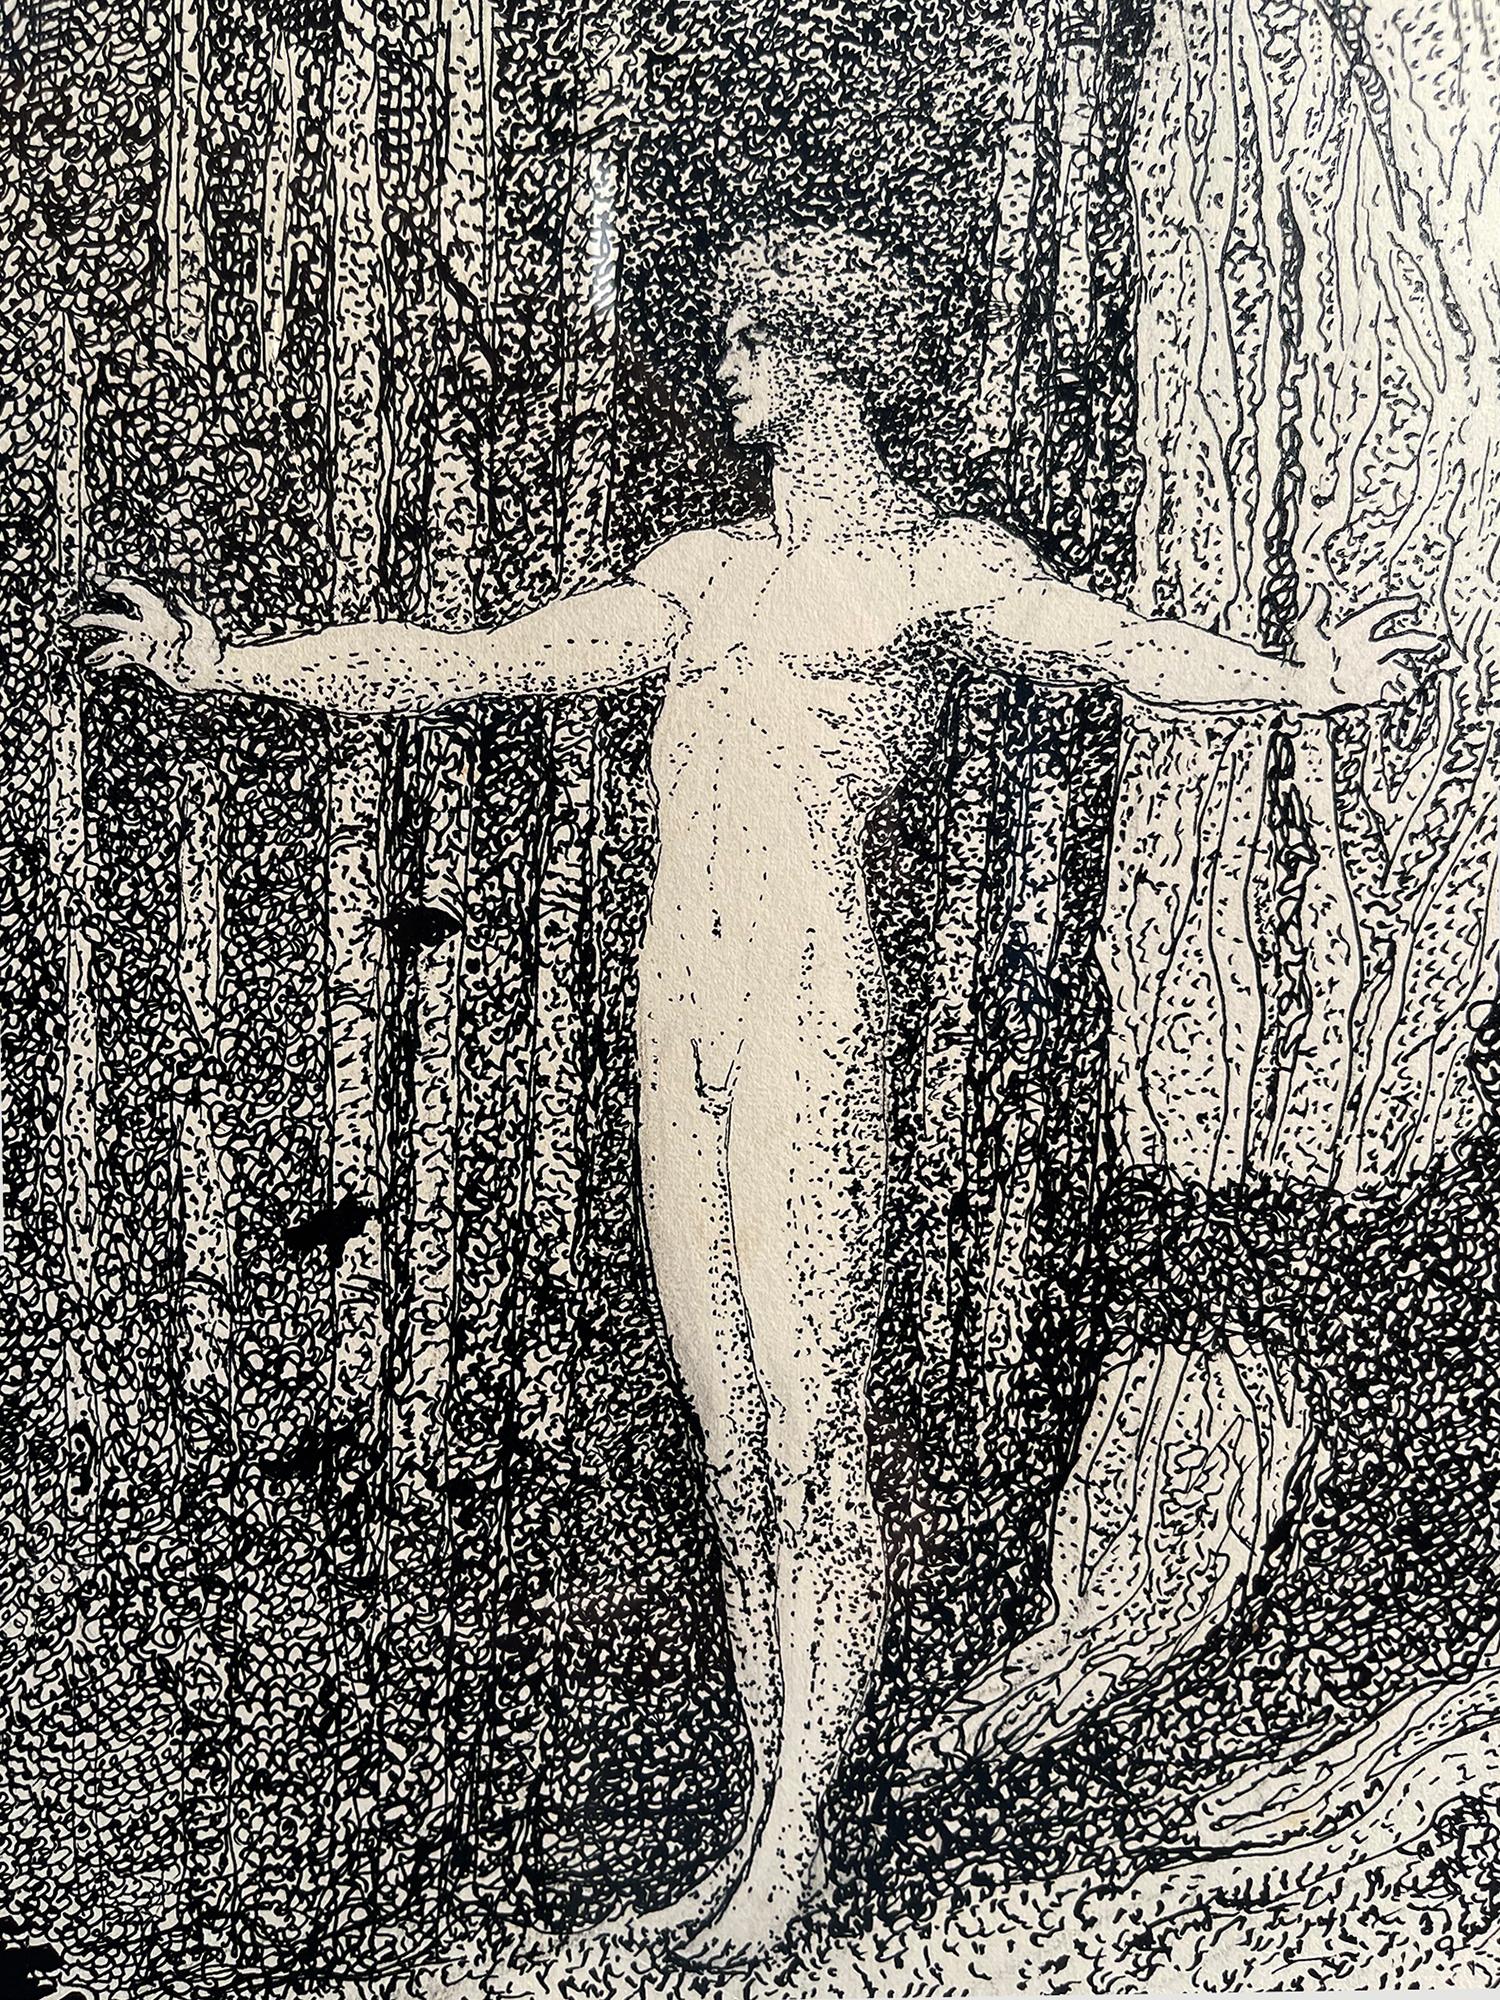 Nude Man in Idyllic Fantasy  Woodland   Pre-Raphaelite  Female Illustrator 1